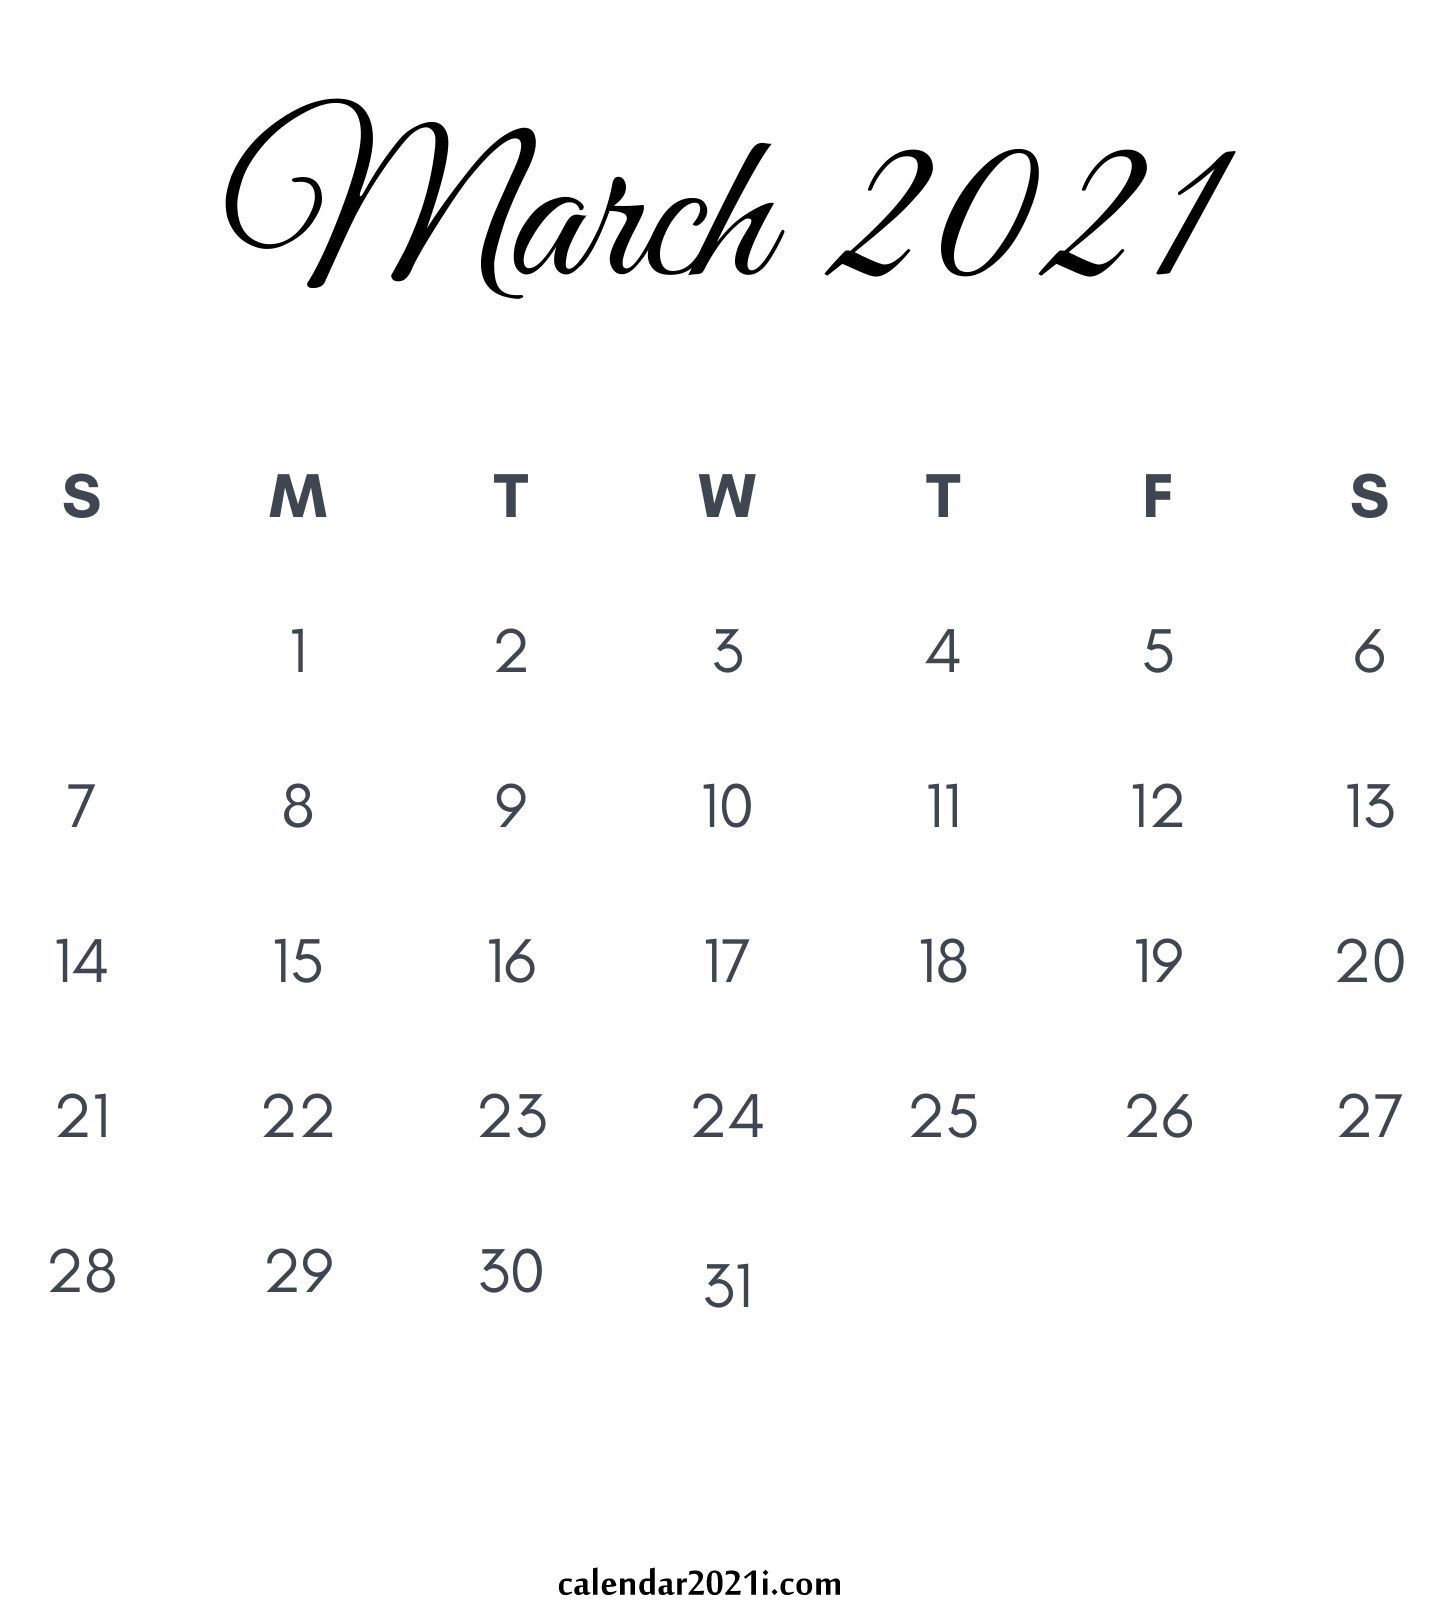 March 2021 Calendar: Printable, Floral, Holidays, Wallpaper, Design & More